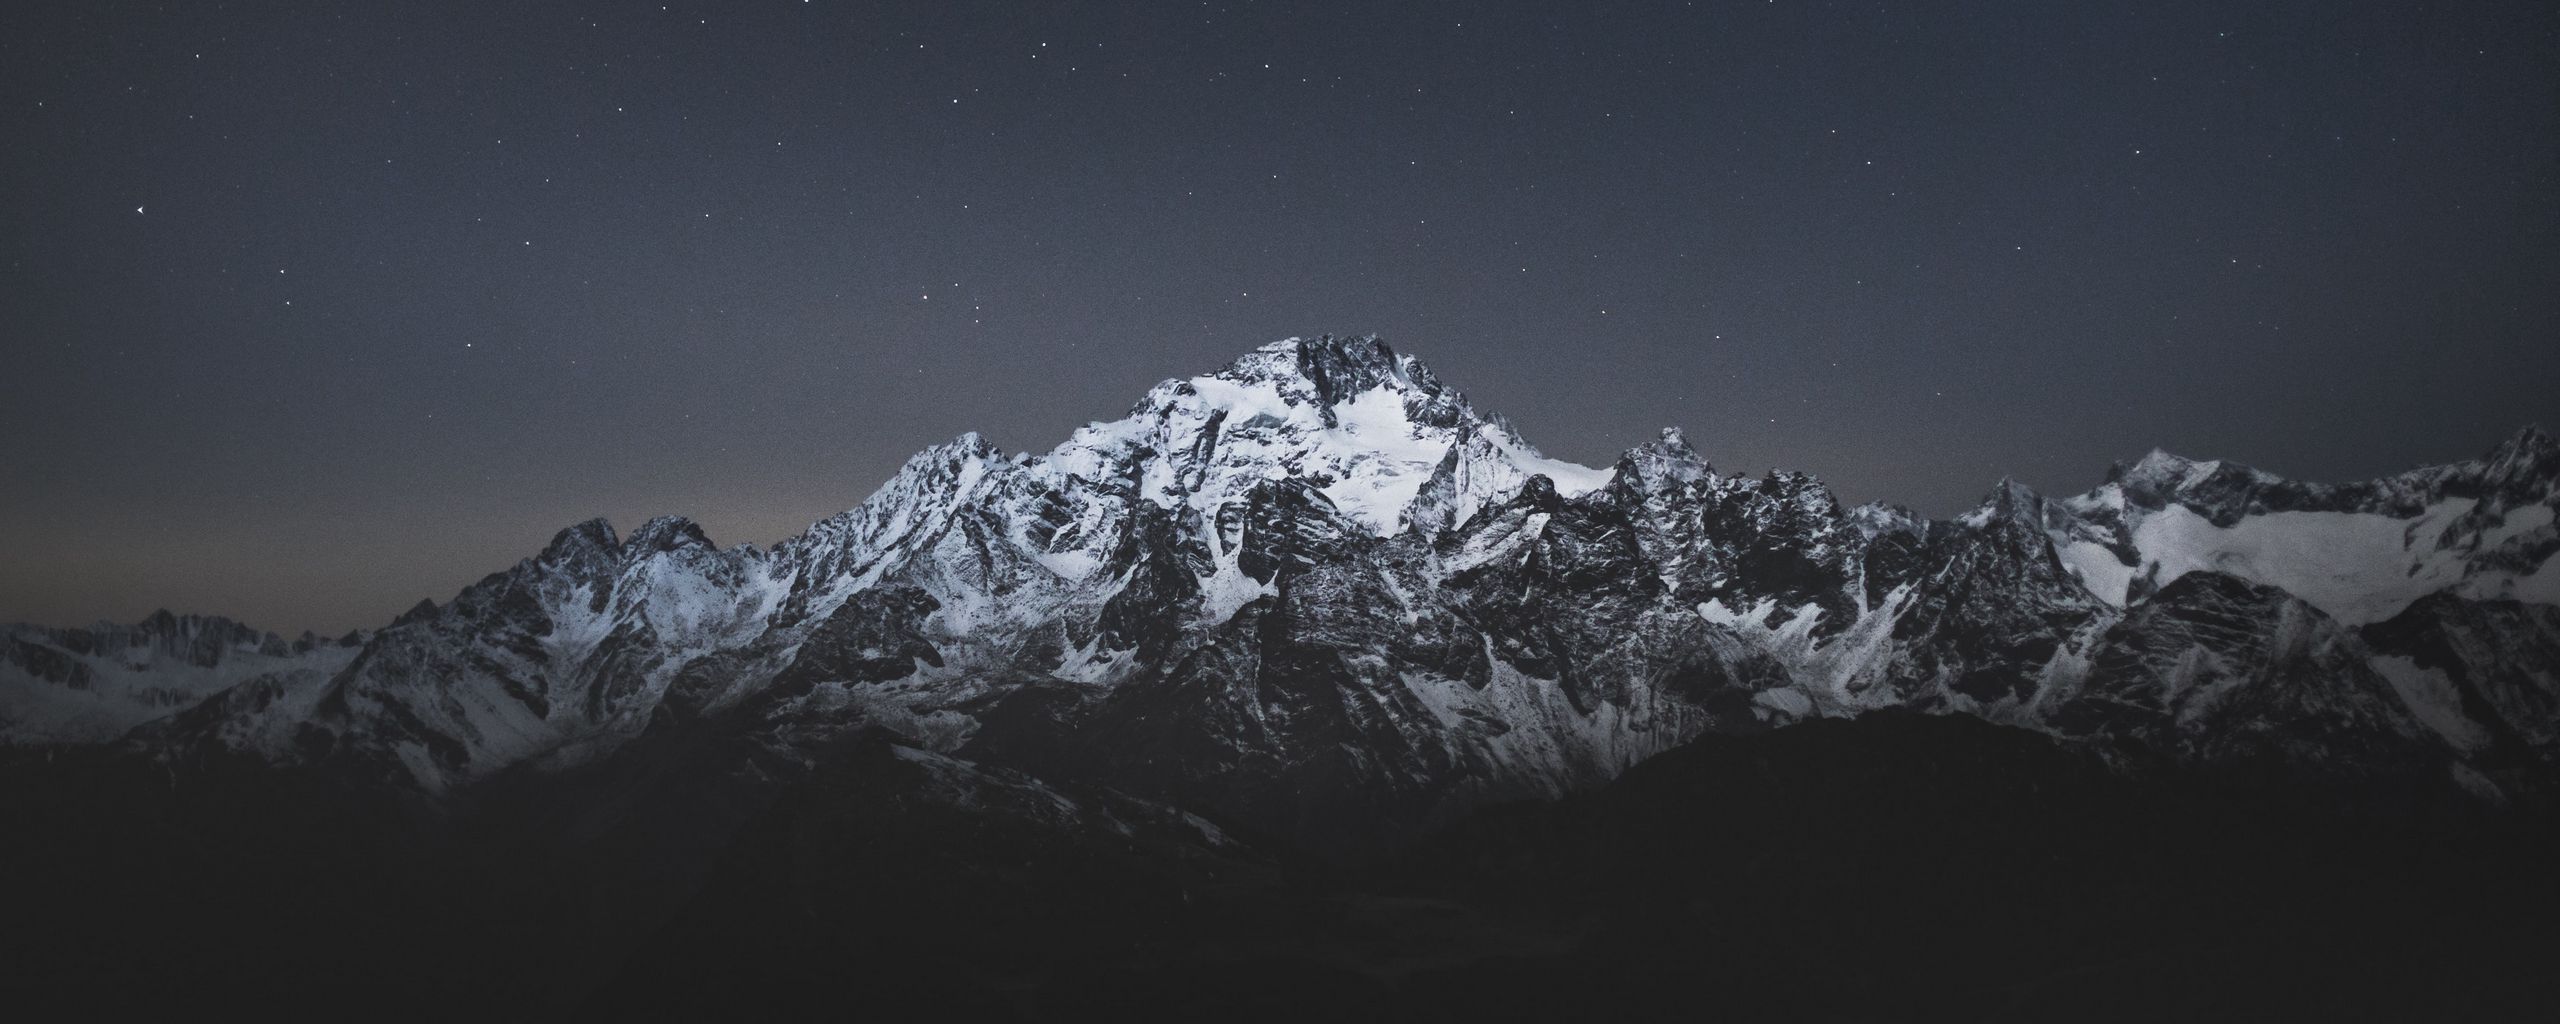 Download wallpaper 2560x1024 mountain, night, starry sky, dark ultrawide monitor HD background